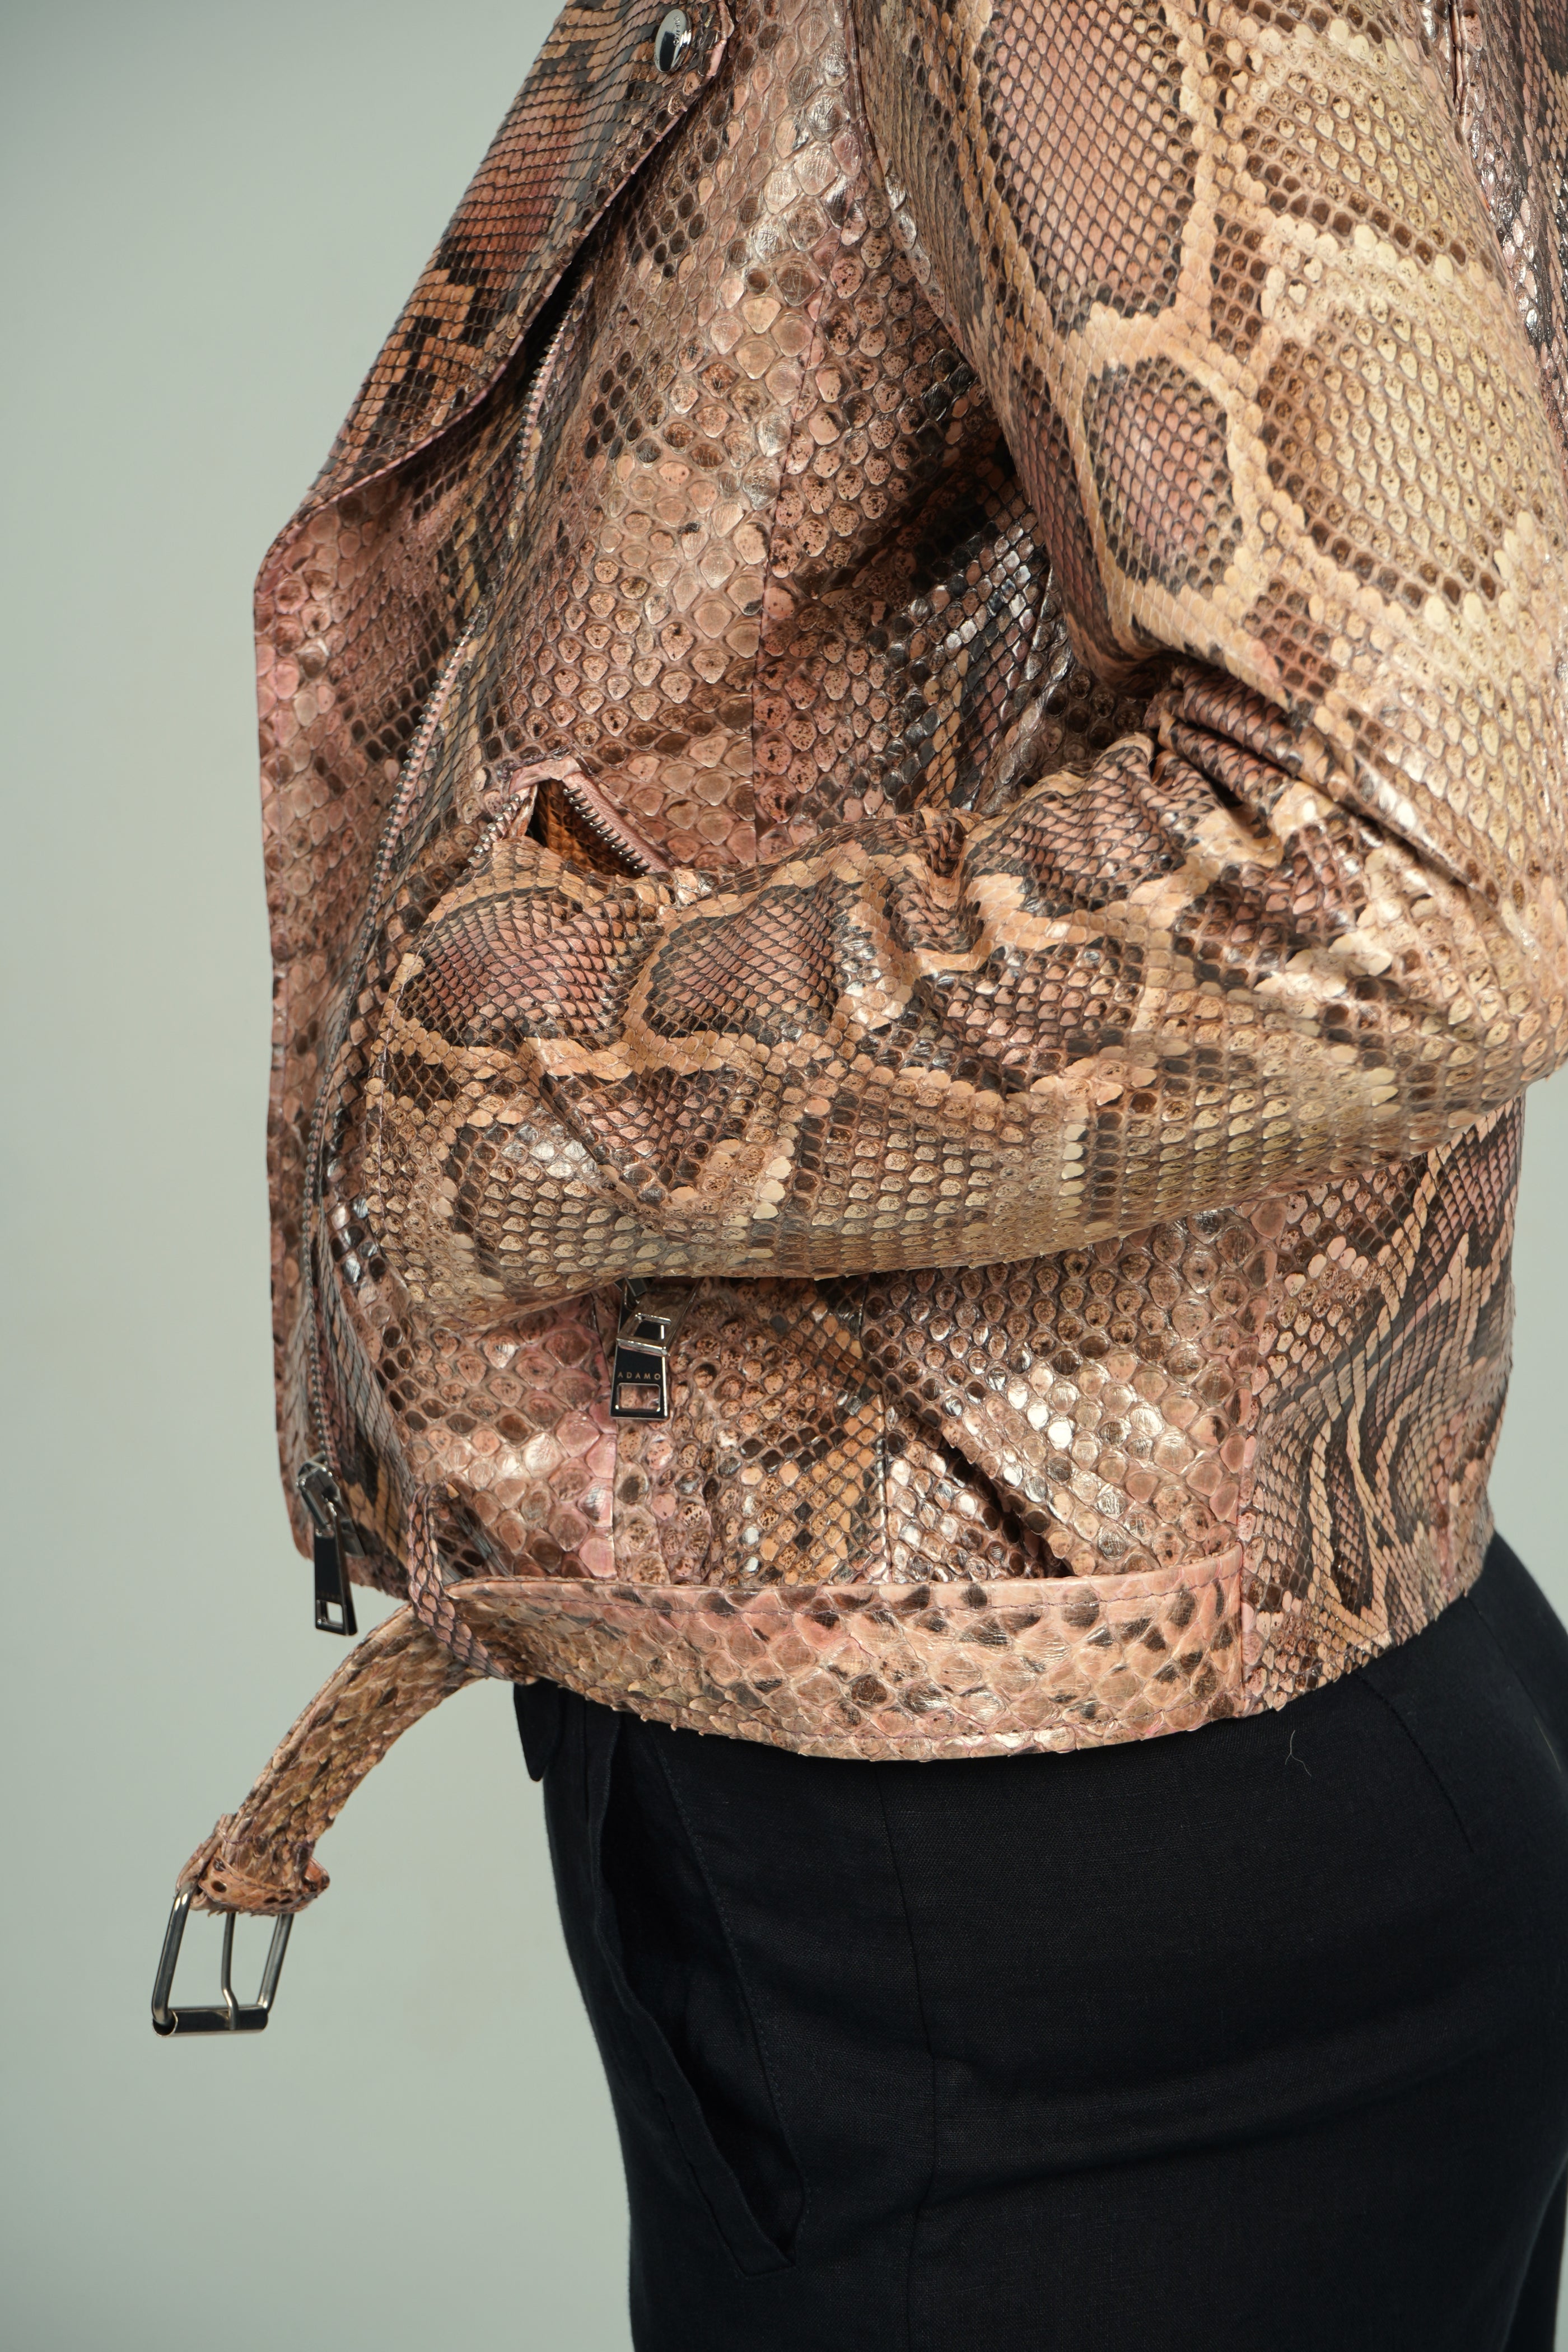 Salmon Gold Python Leather Jacket